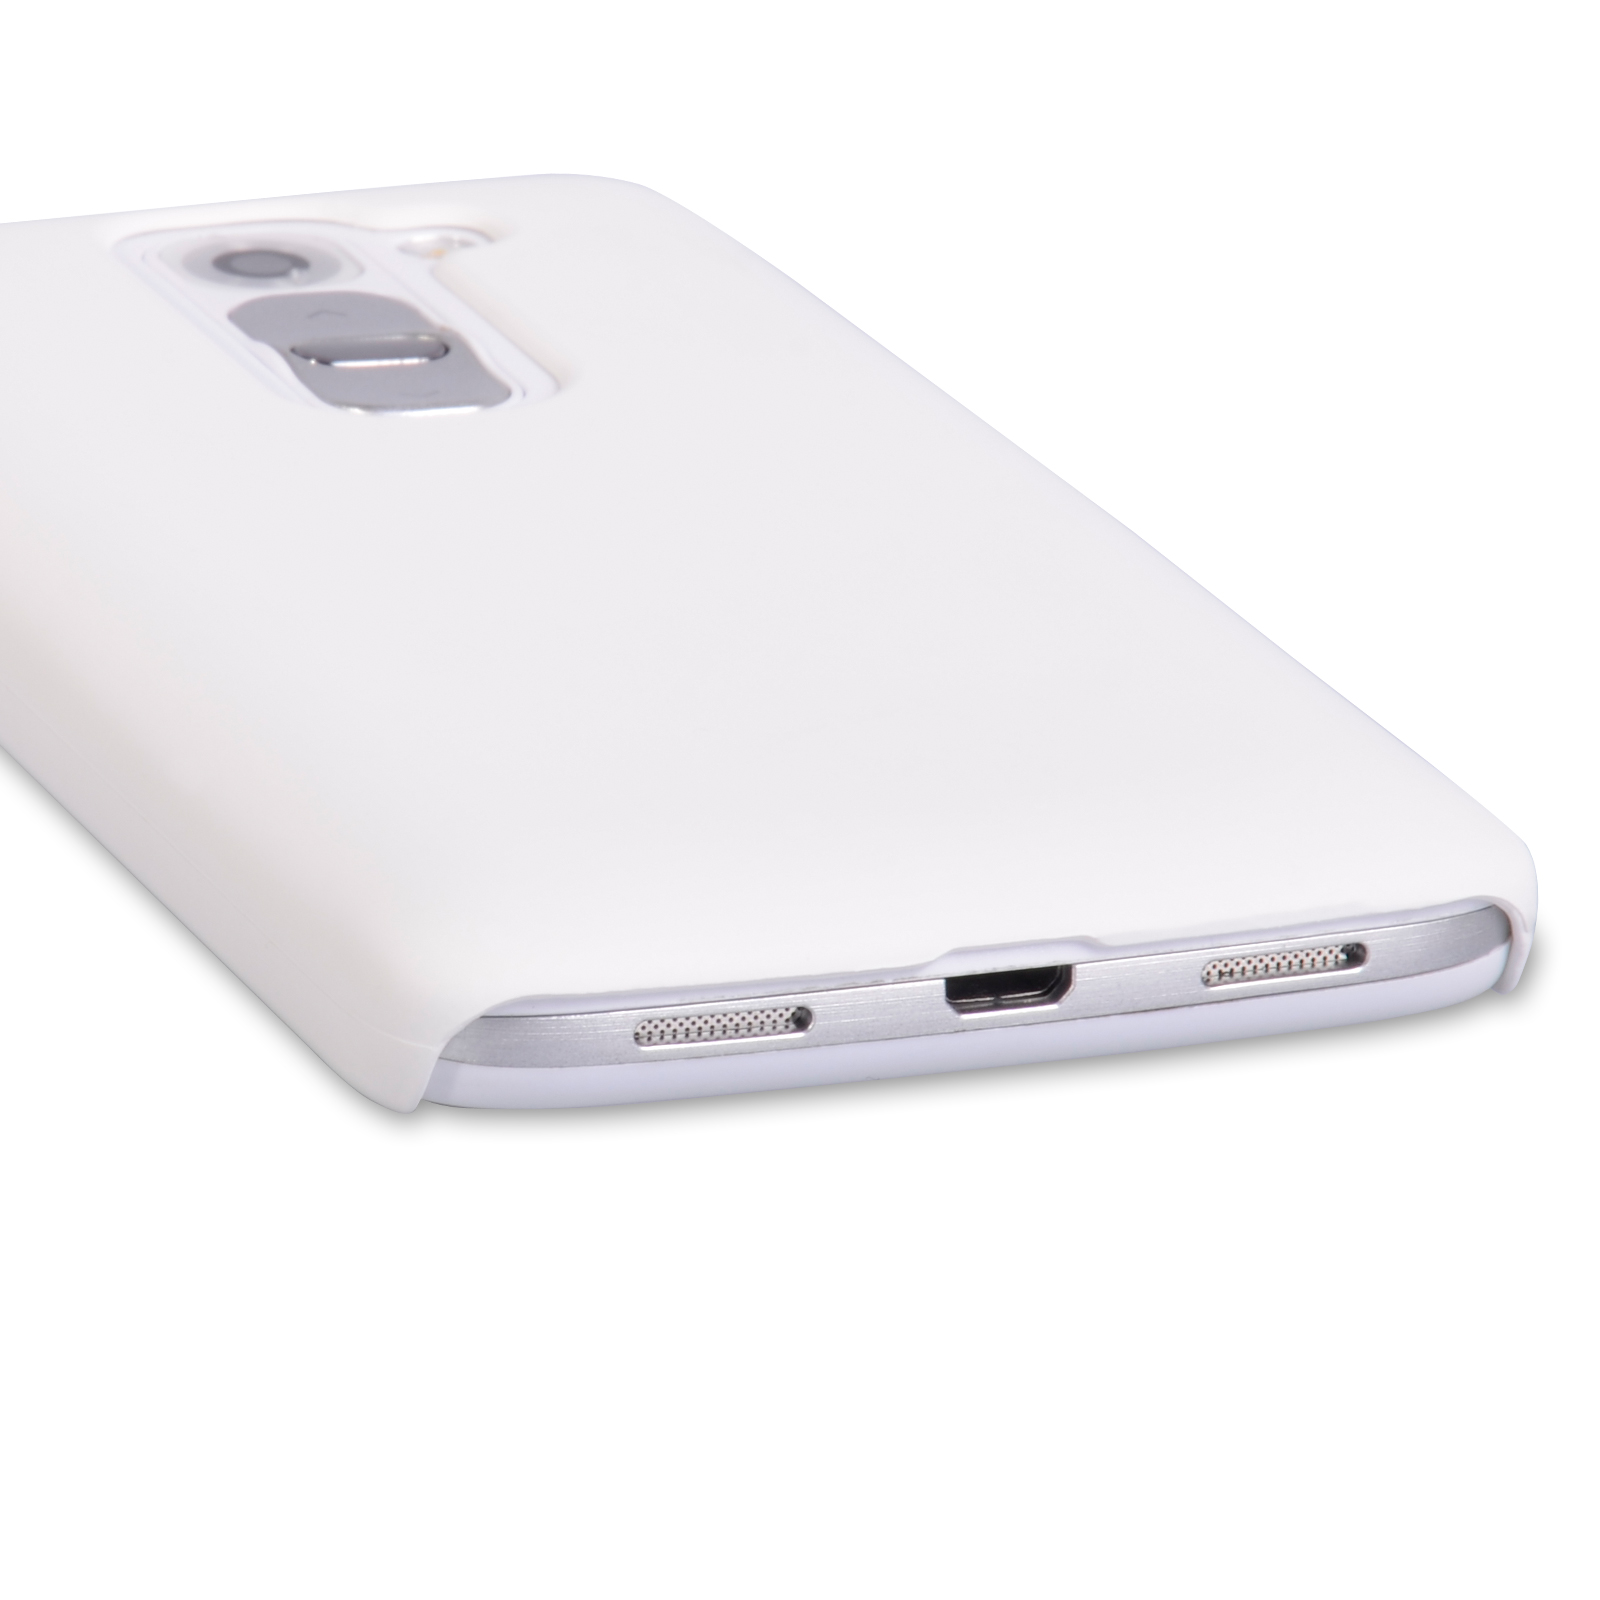 YouSave Accessories LG G2 Mini Hard Hybrid Case - White